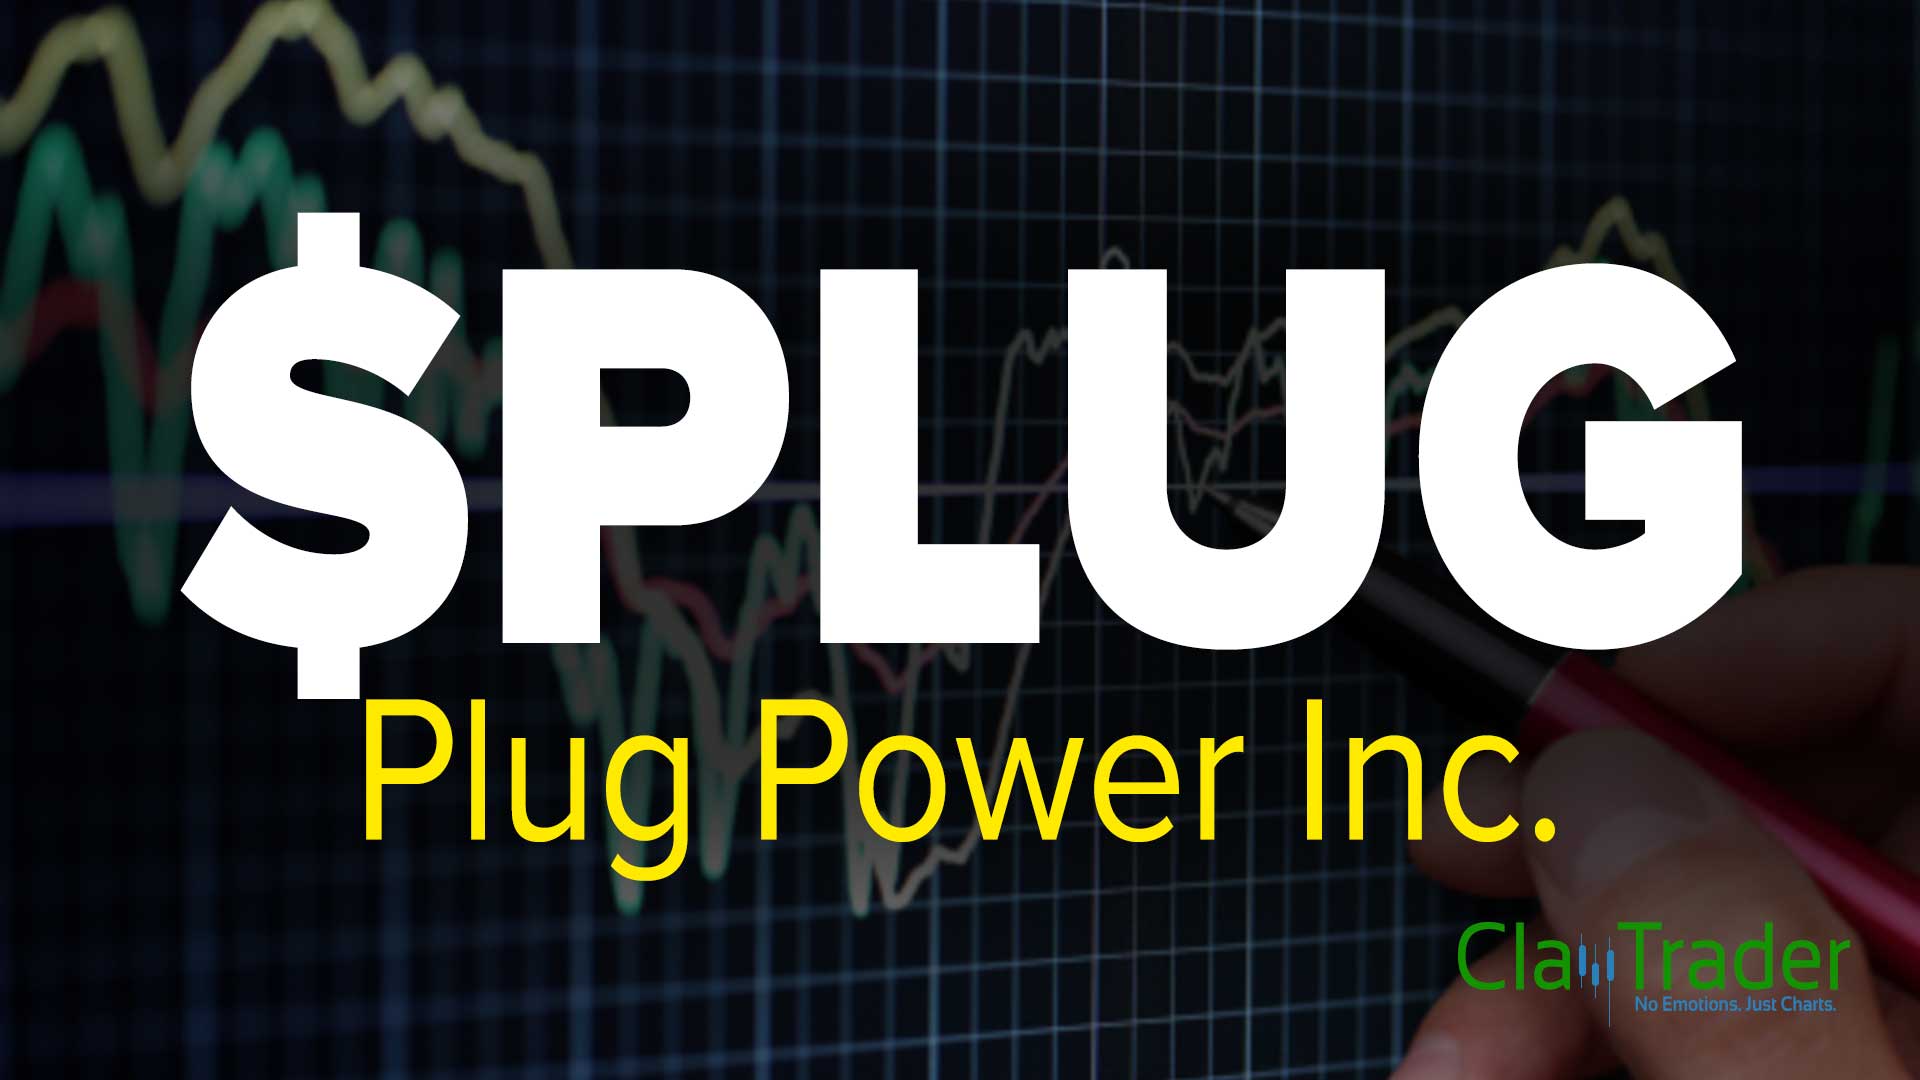 plug power stock invest